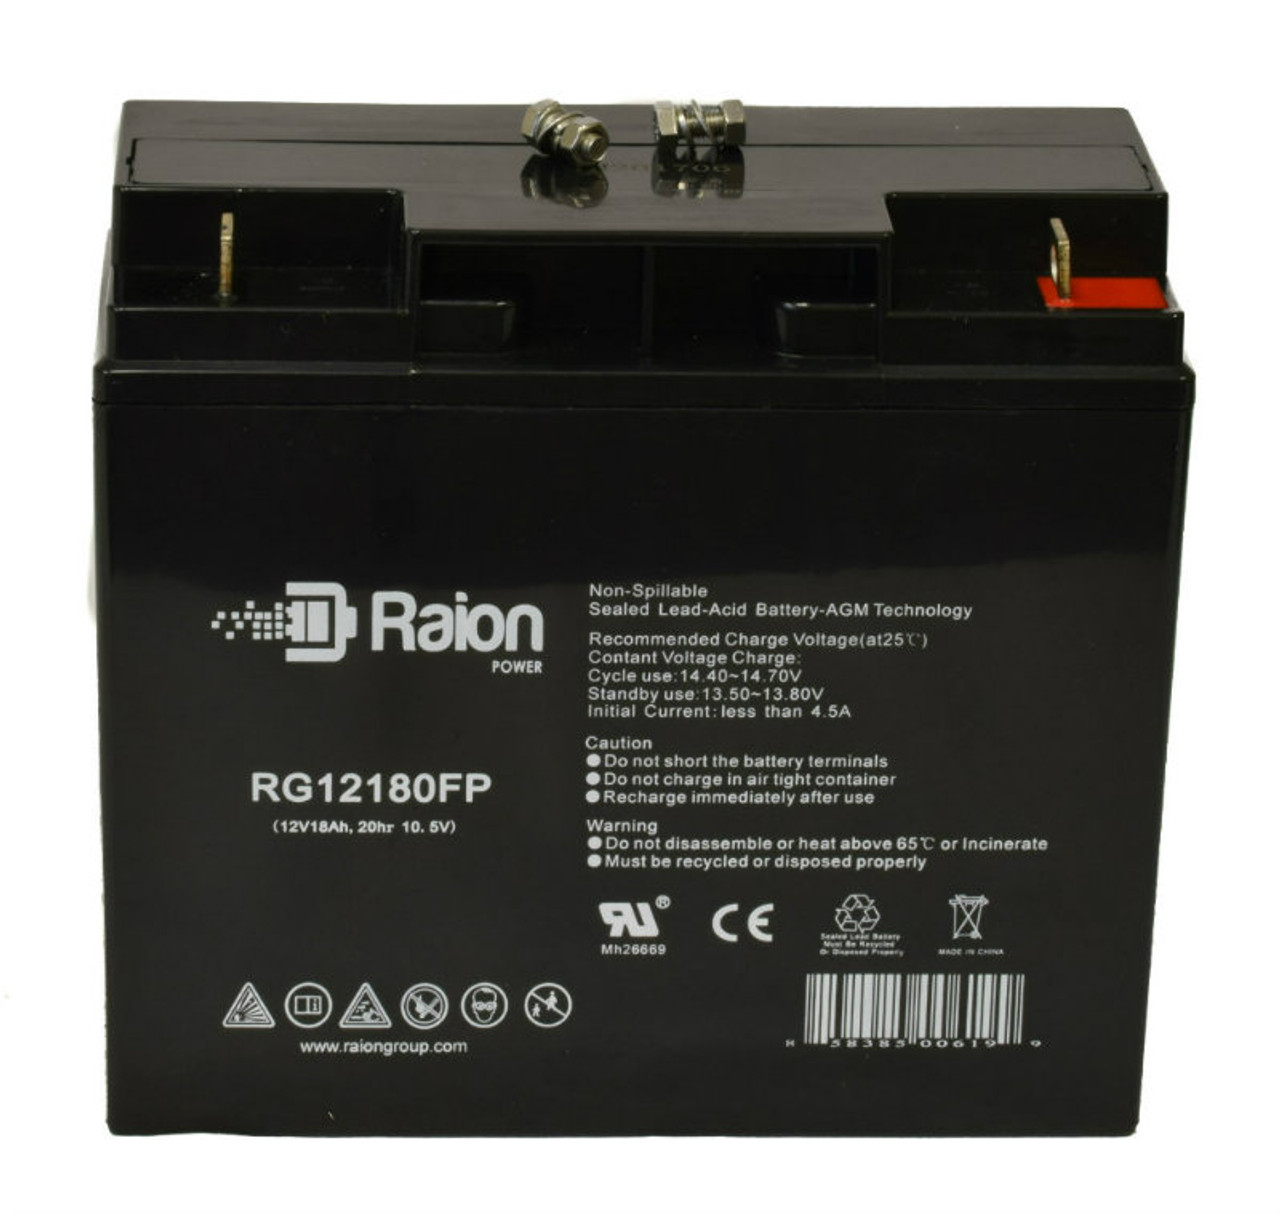 Raion Power RG12180FP 12V 18Ah Lead Acid Battery for TLV12180